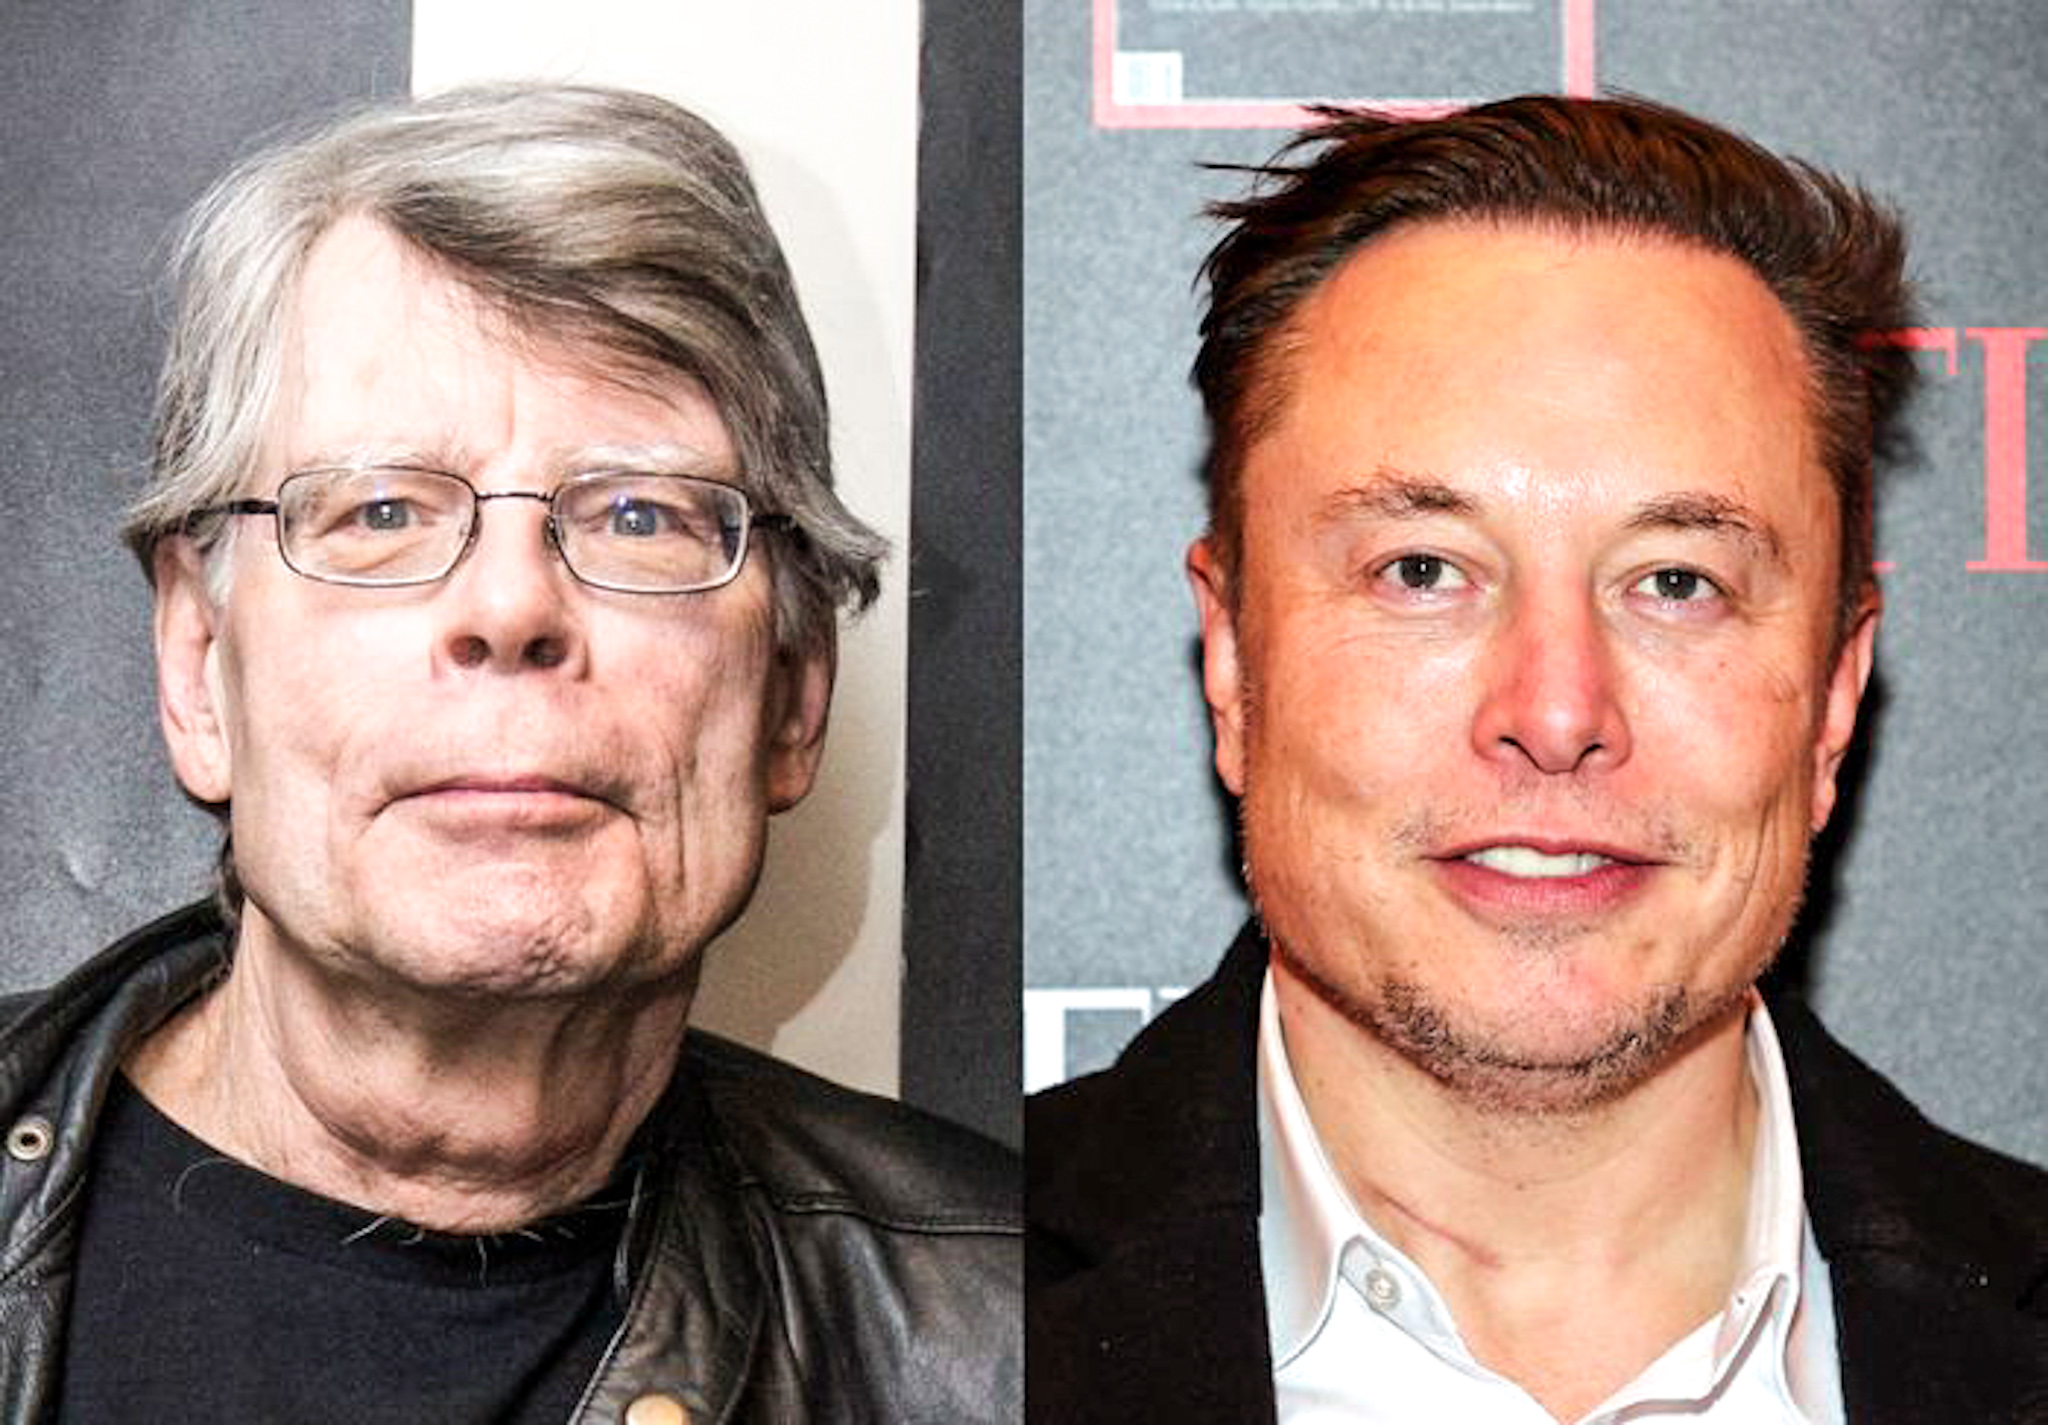 Elon Musk Files Suit Against Stephen King